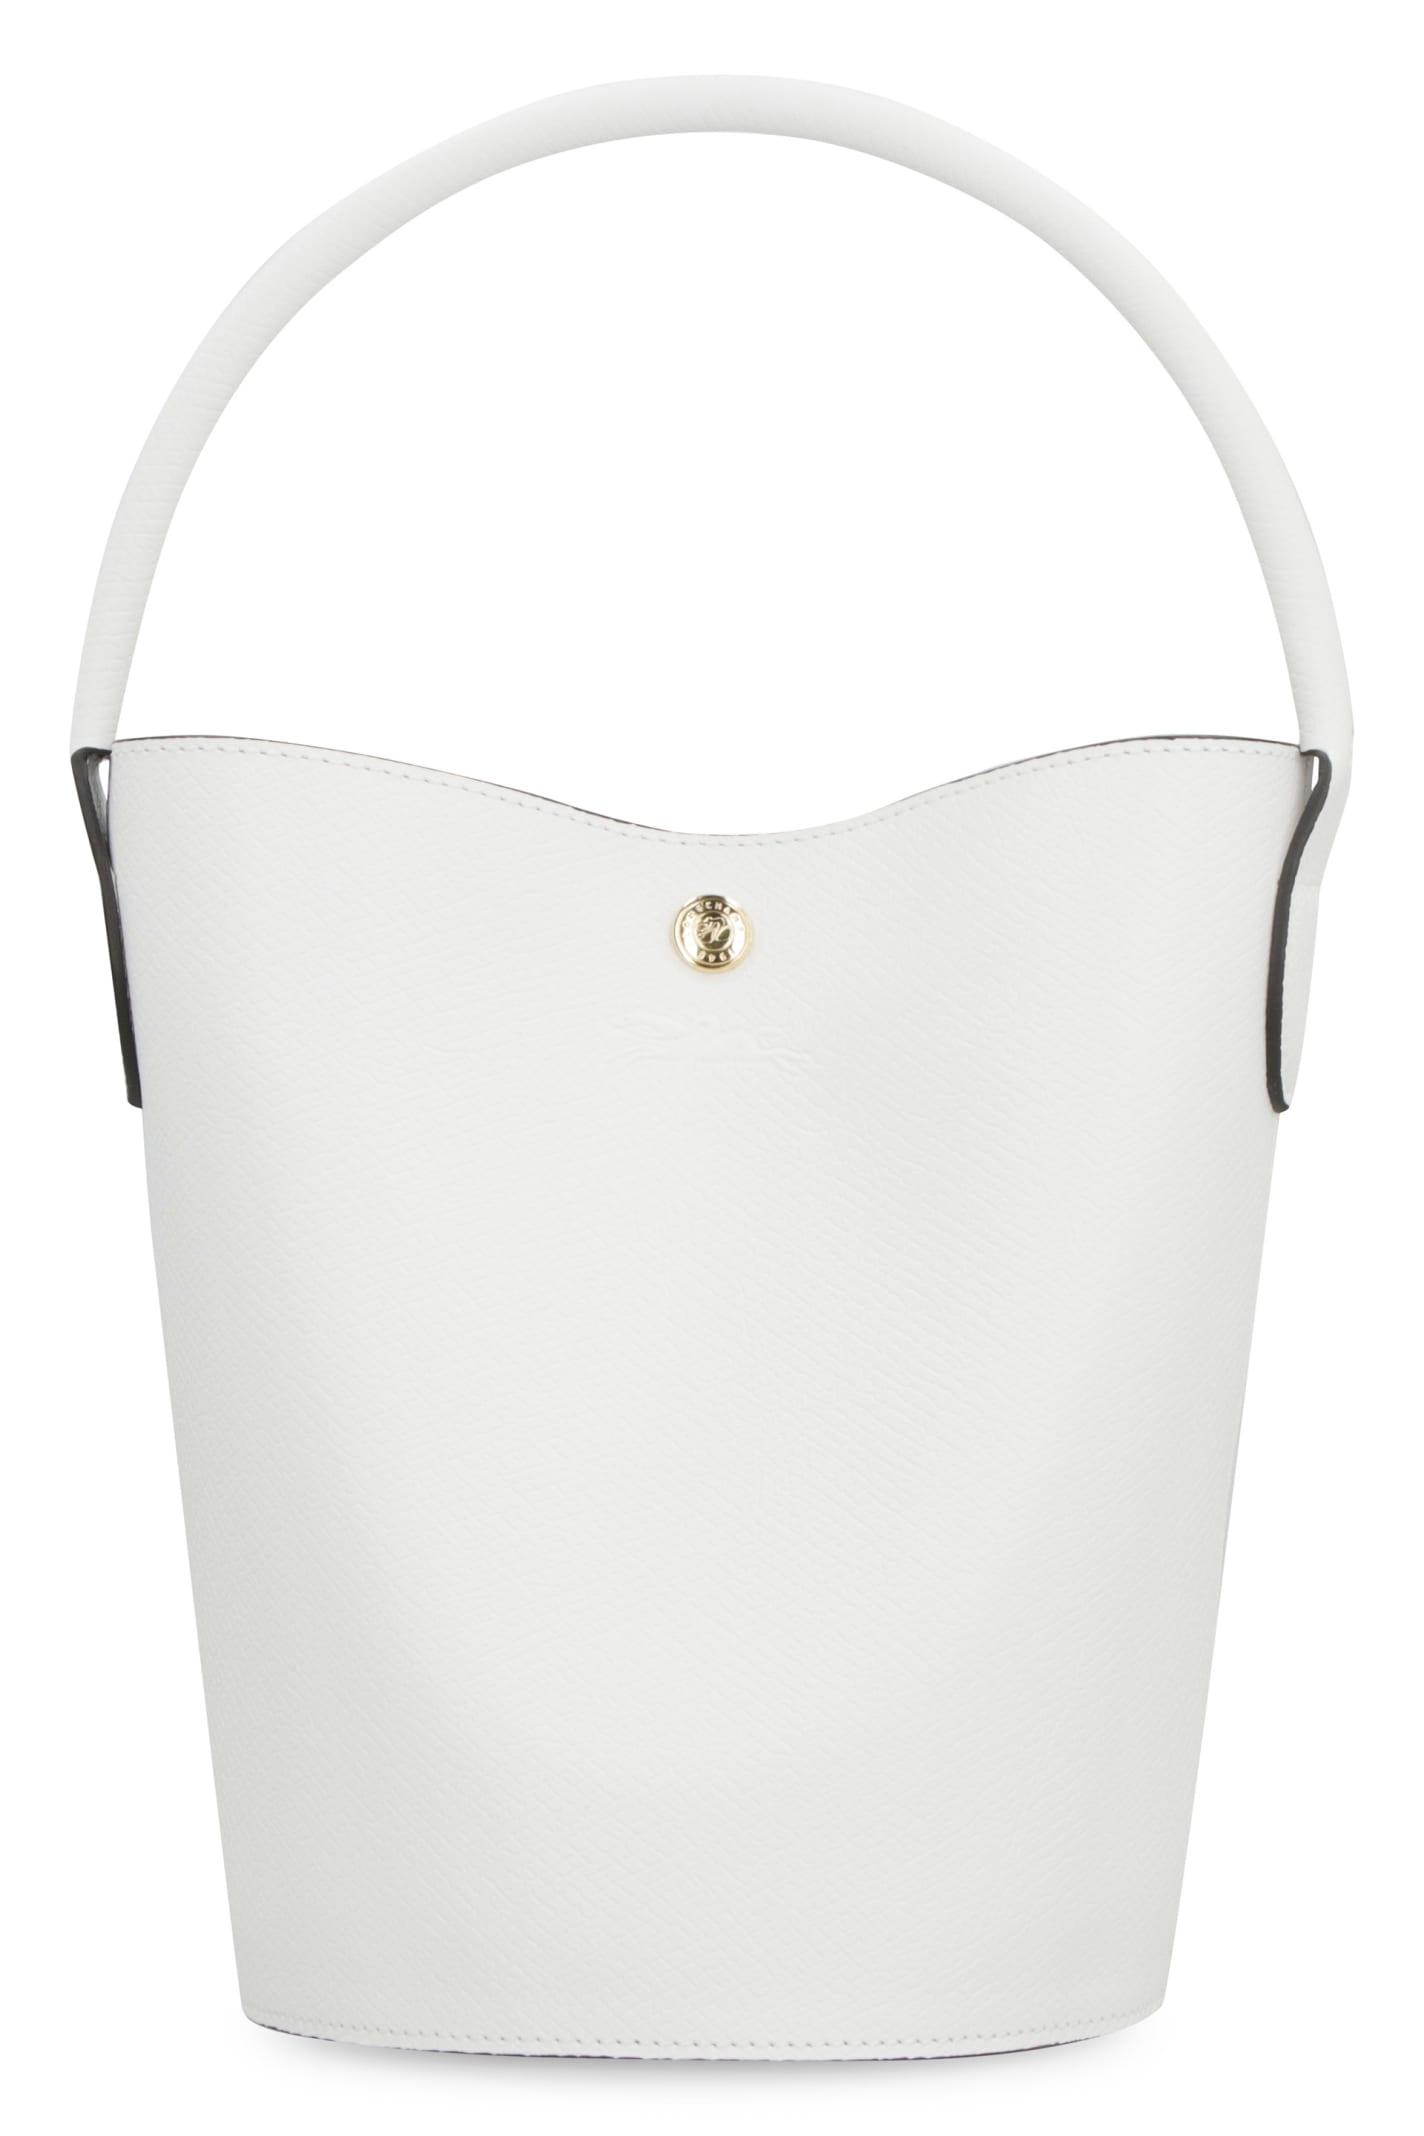 Longchamp Le Pliage Filet Mini Top Handle Bag, Ecru at John Lewis & Partners